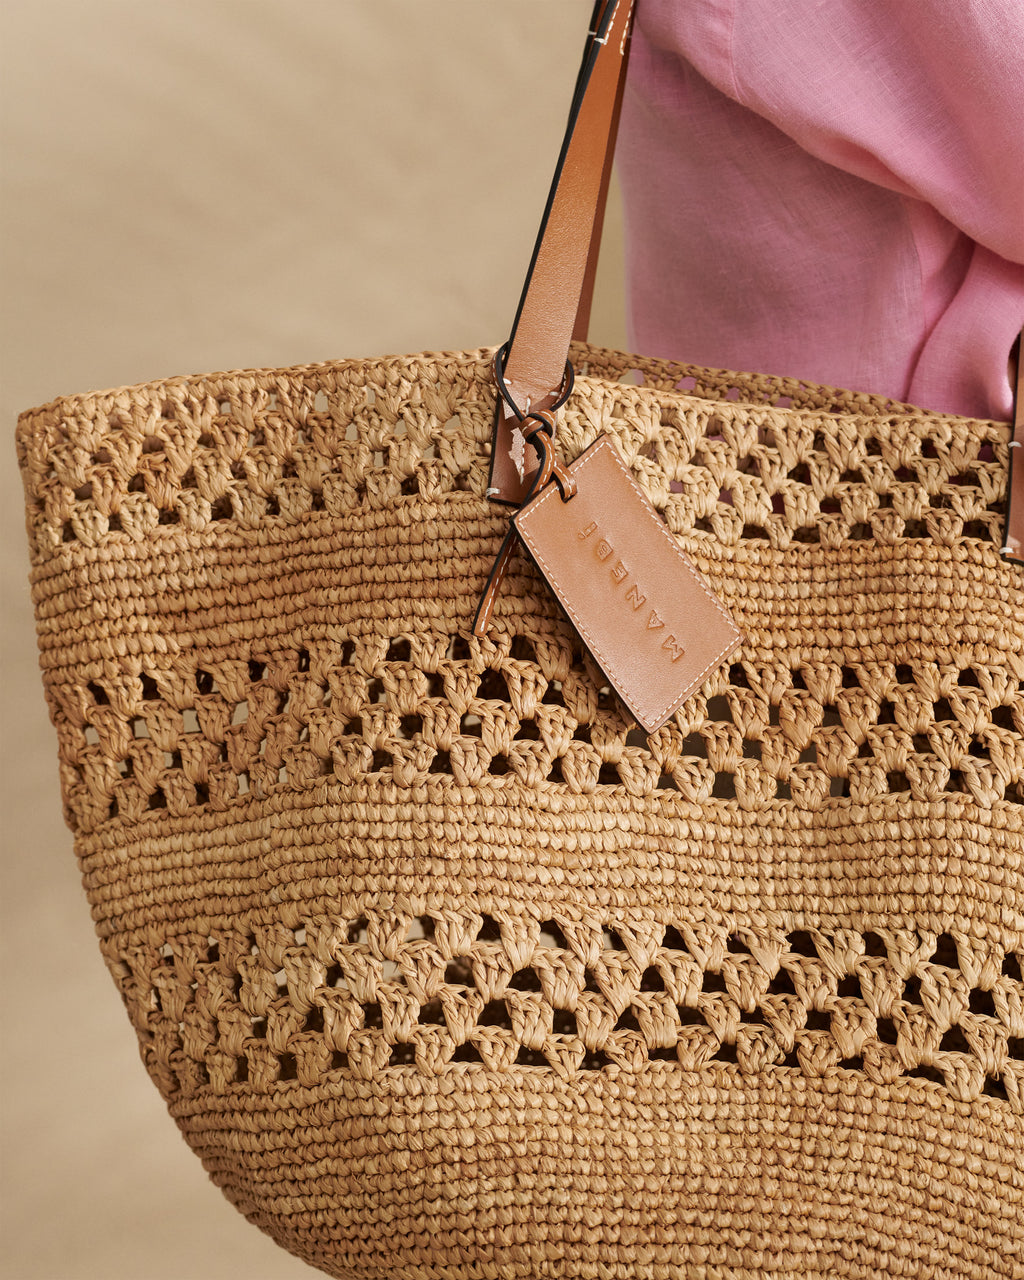 Weaving Raffia & Leather Basket Bag - Tan